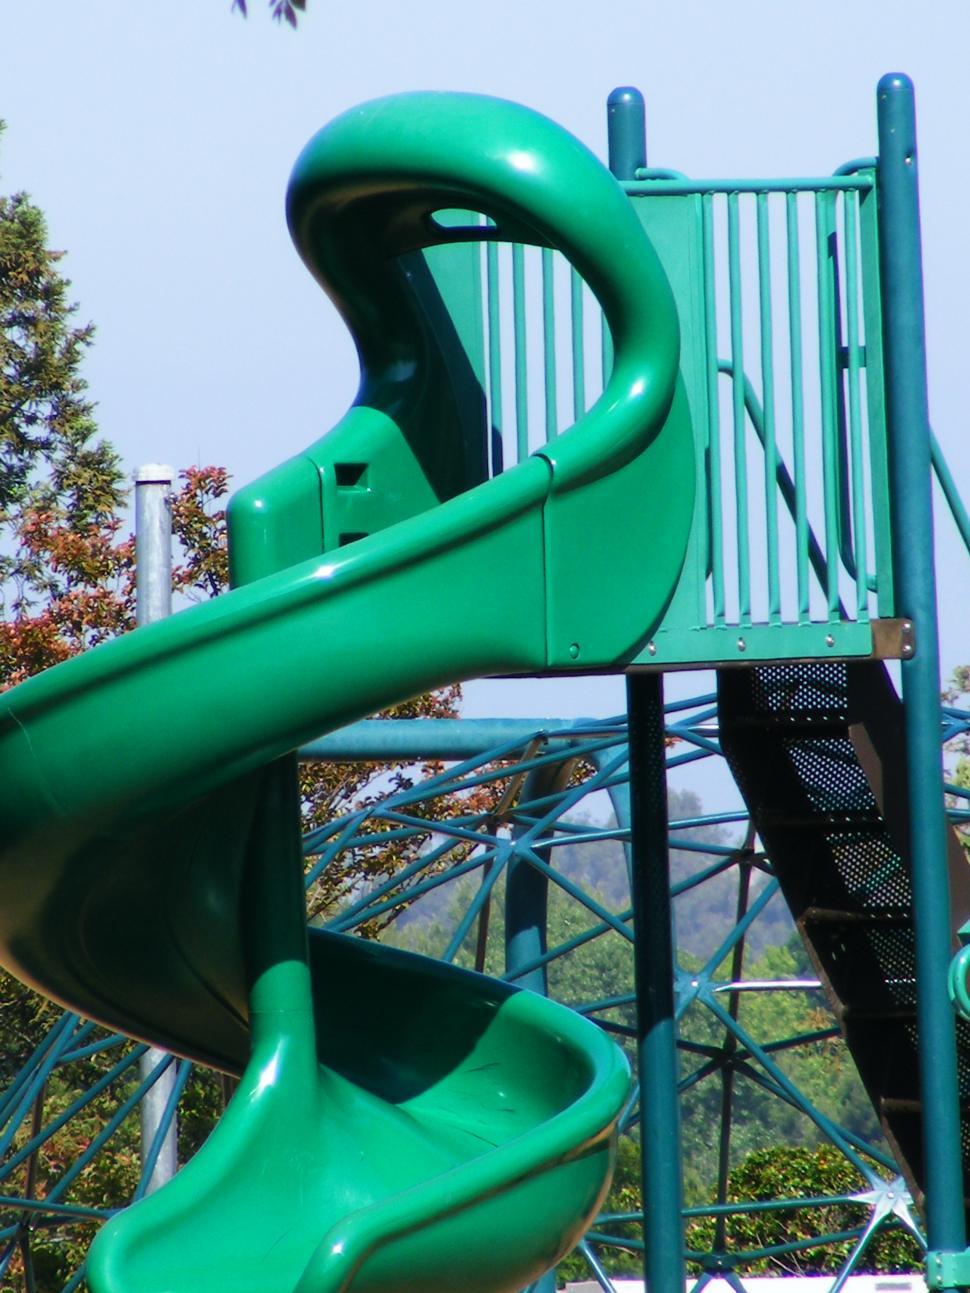 Free Image of Playground Slide 